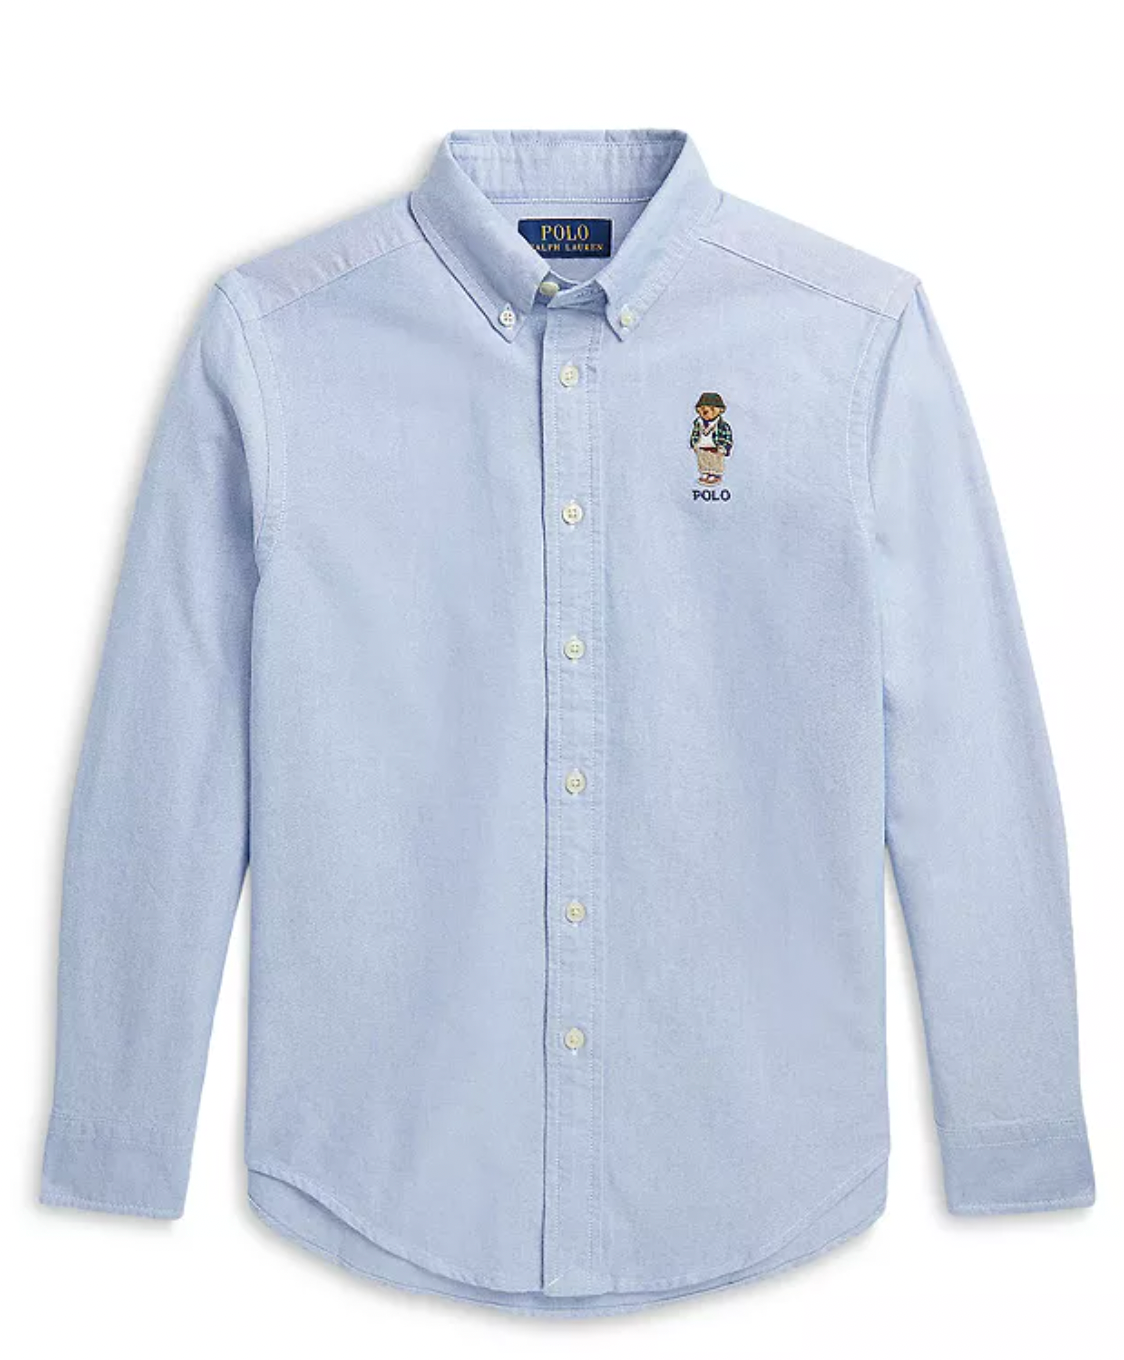 Boys Cotton Oxford Shirt